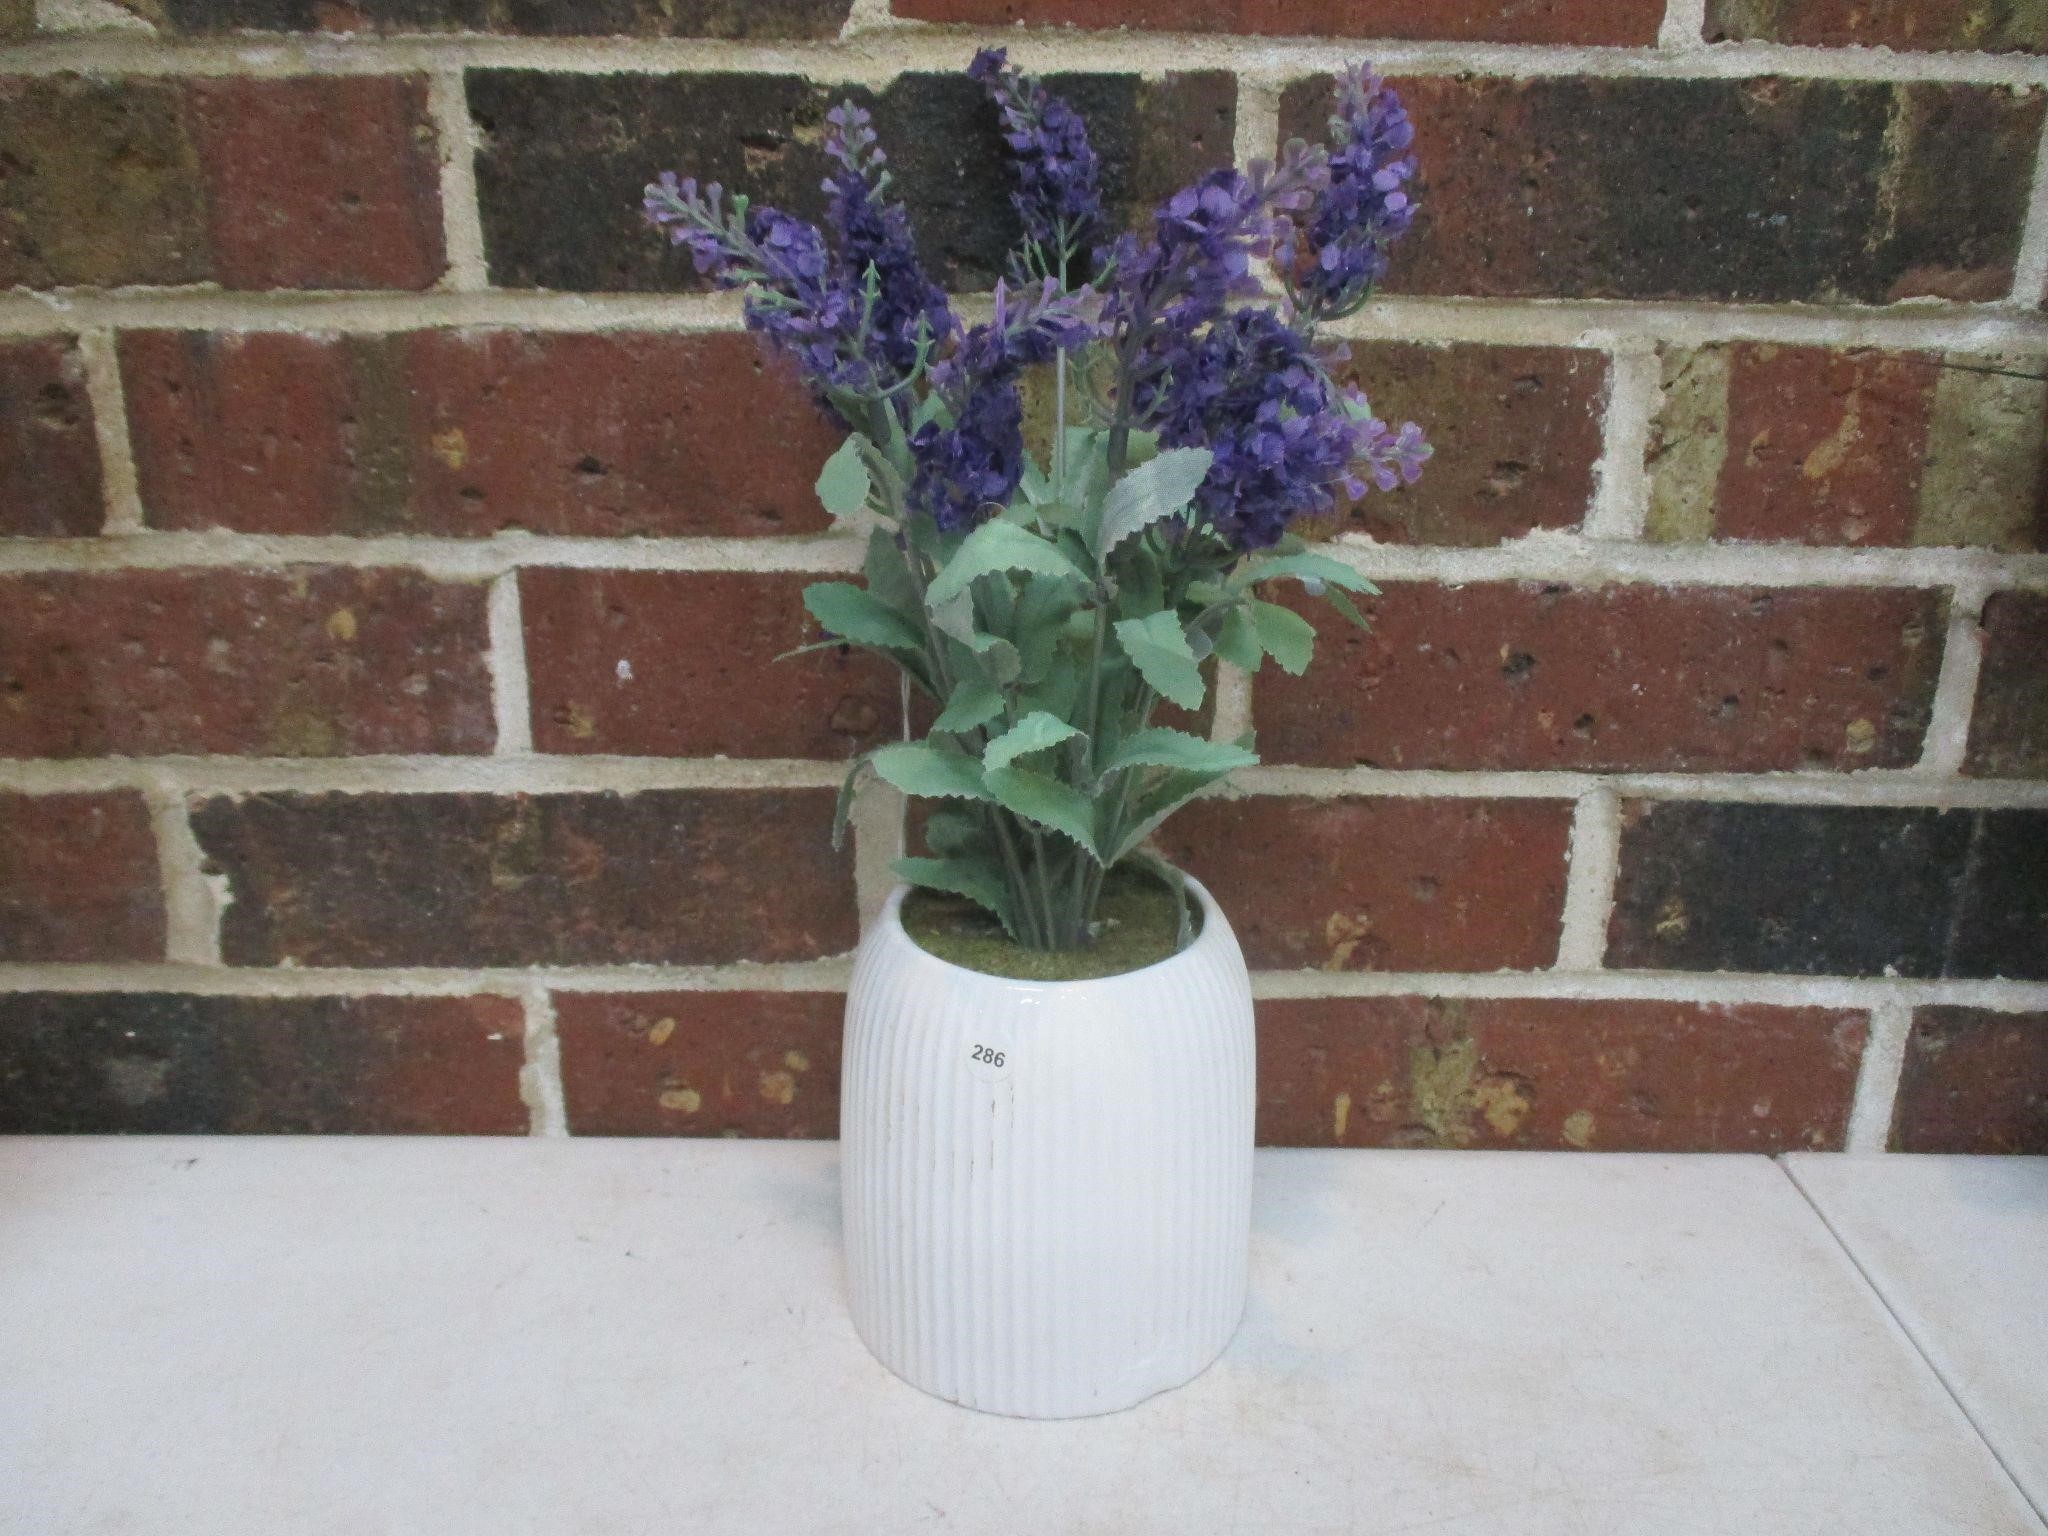 Flower Pot with Lavender Foliage